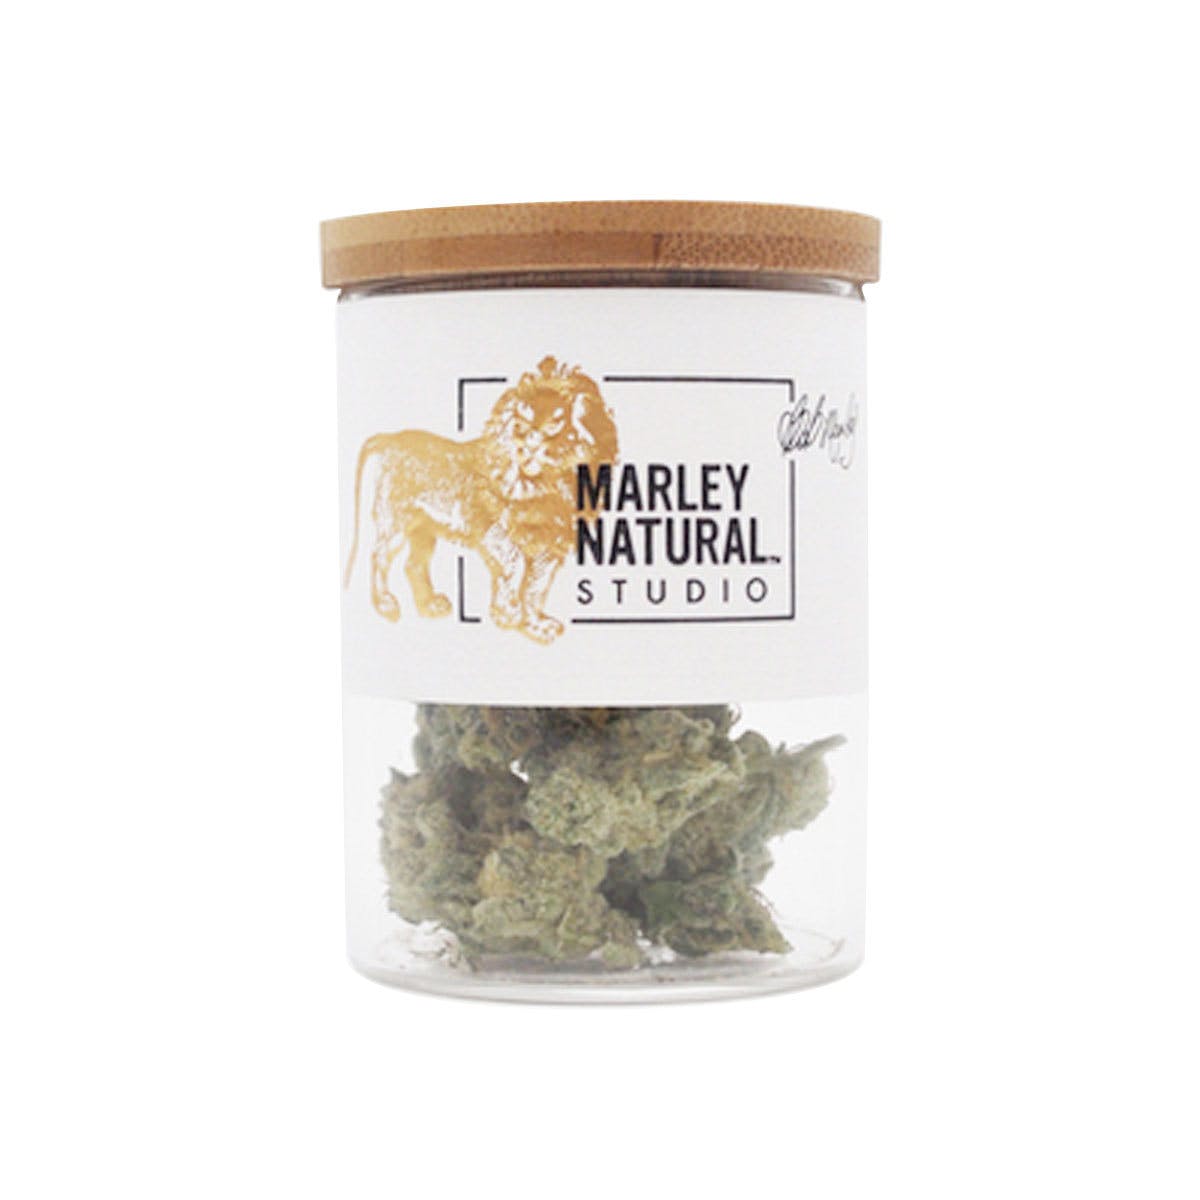 Marley Natural STUDIO Collection